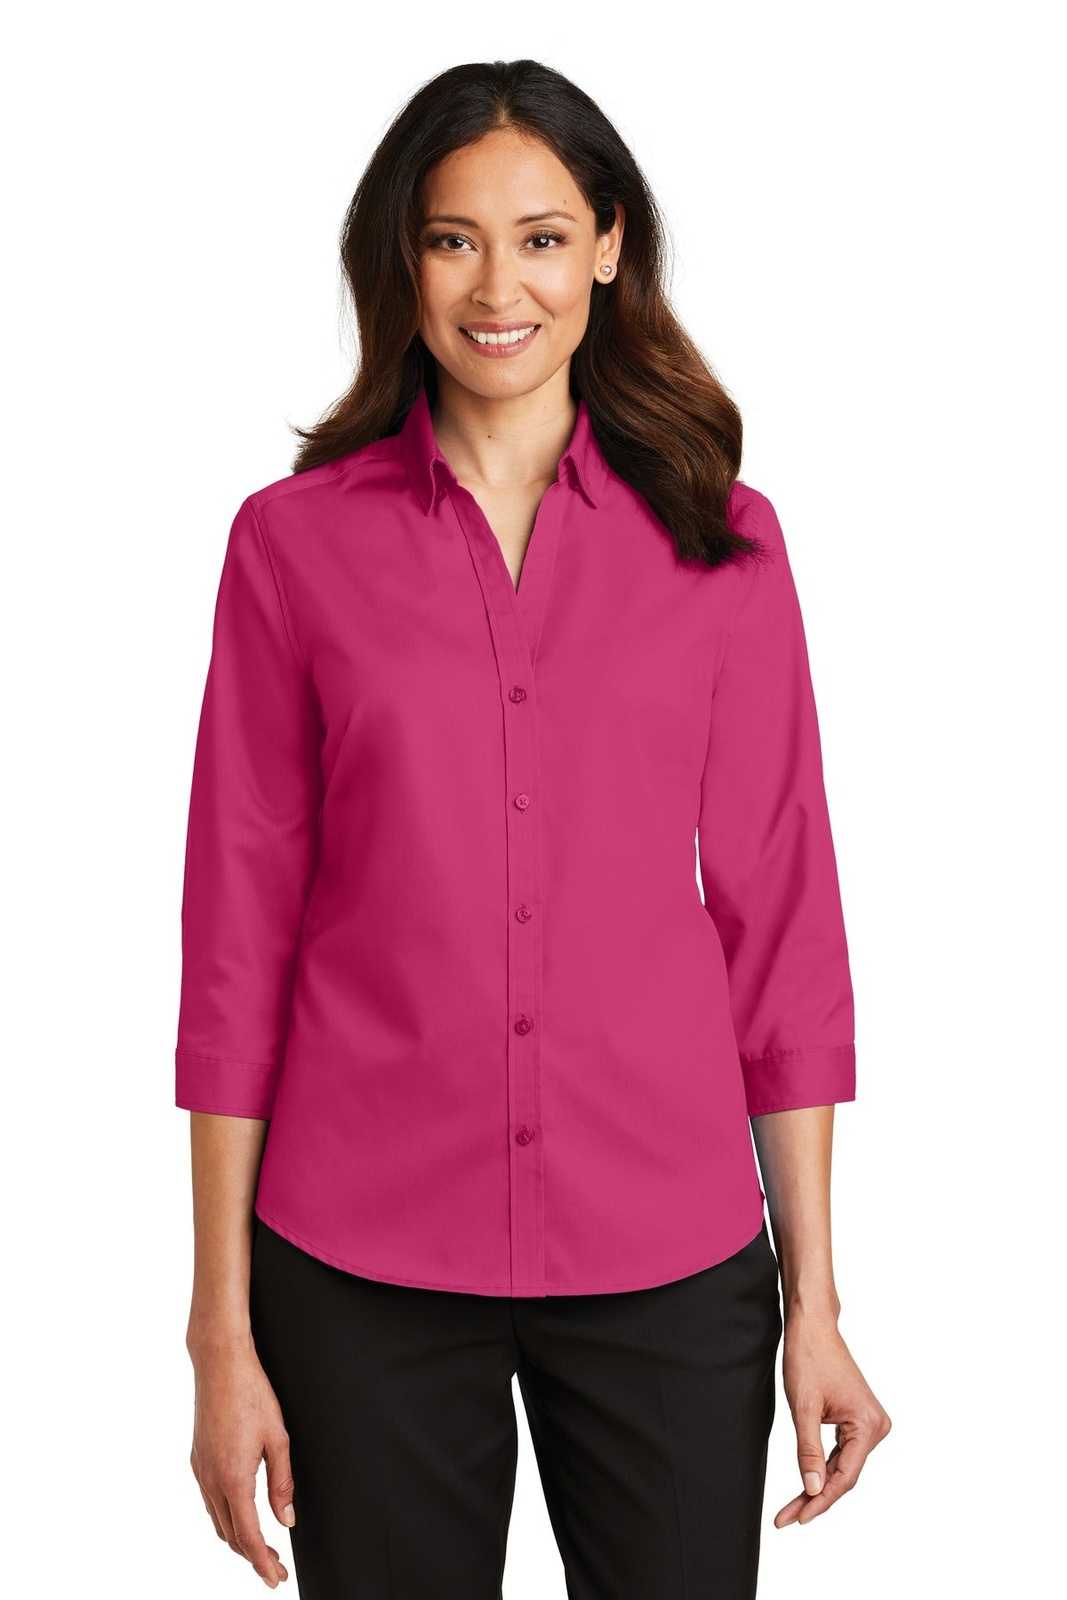 Port Authority L665 Ladies 3/4-Sleeve Superpro Twill Shirt - Pink Azalea - HIT a Double - 1